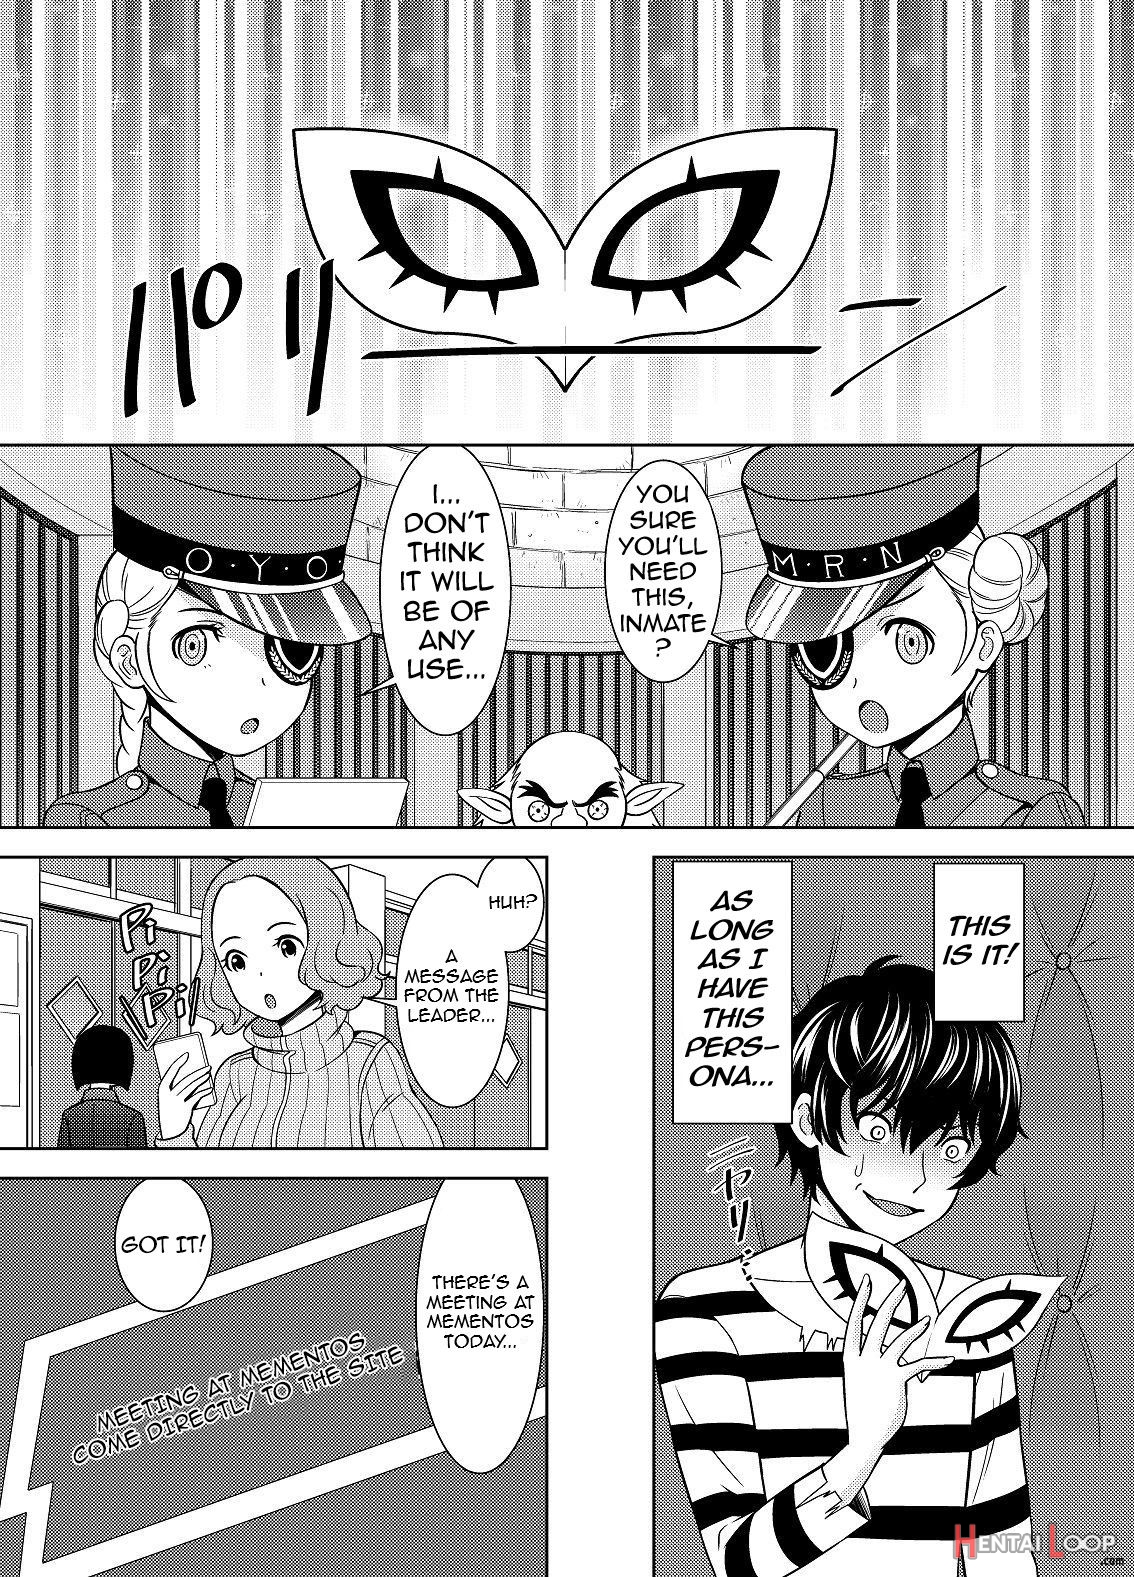 Take Haru's Heart page 6